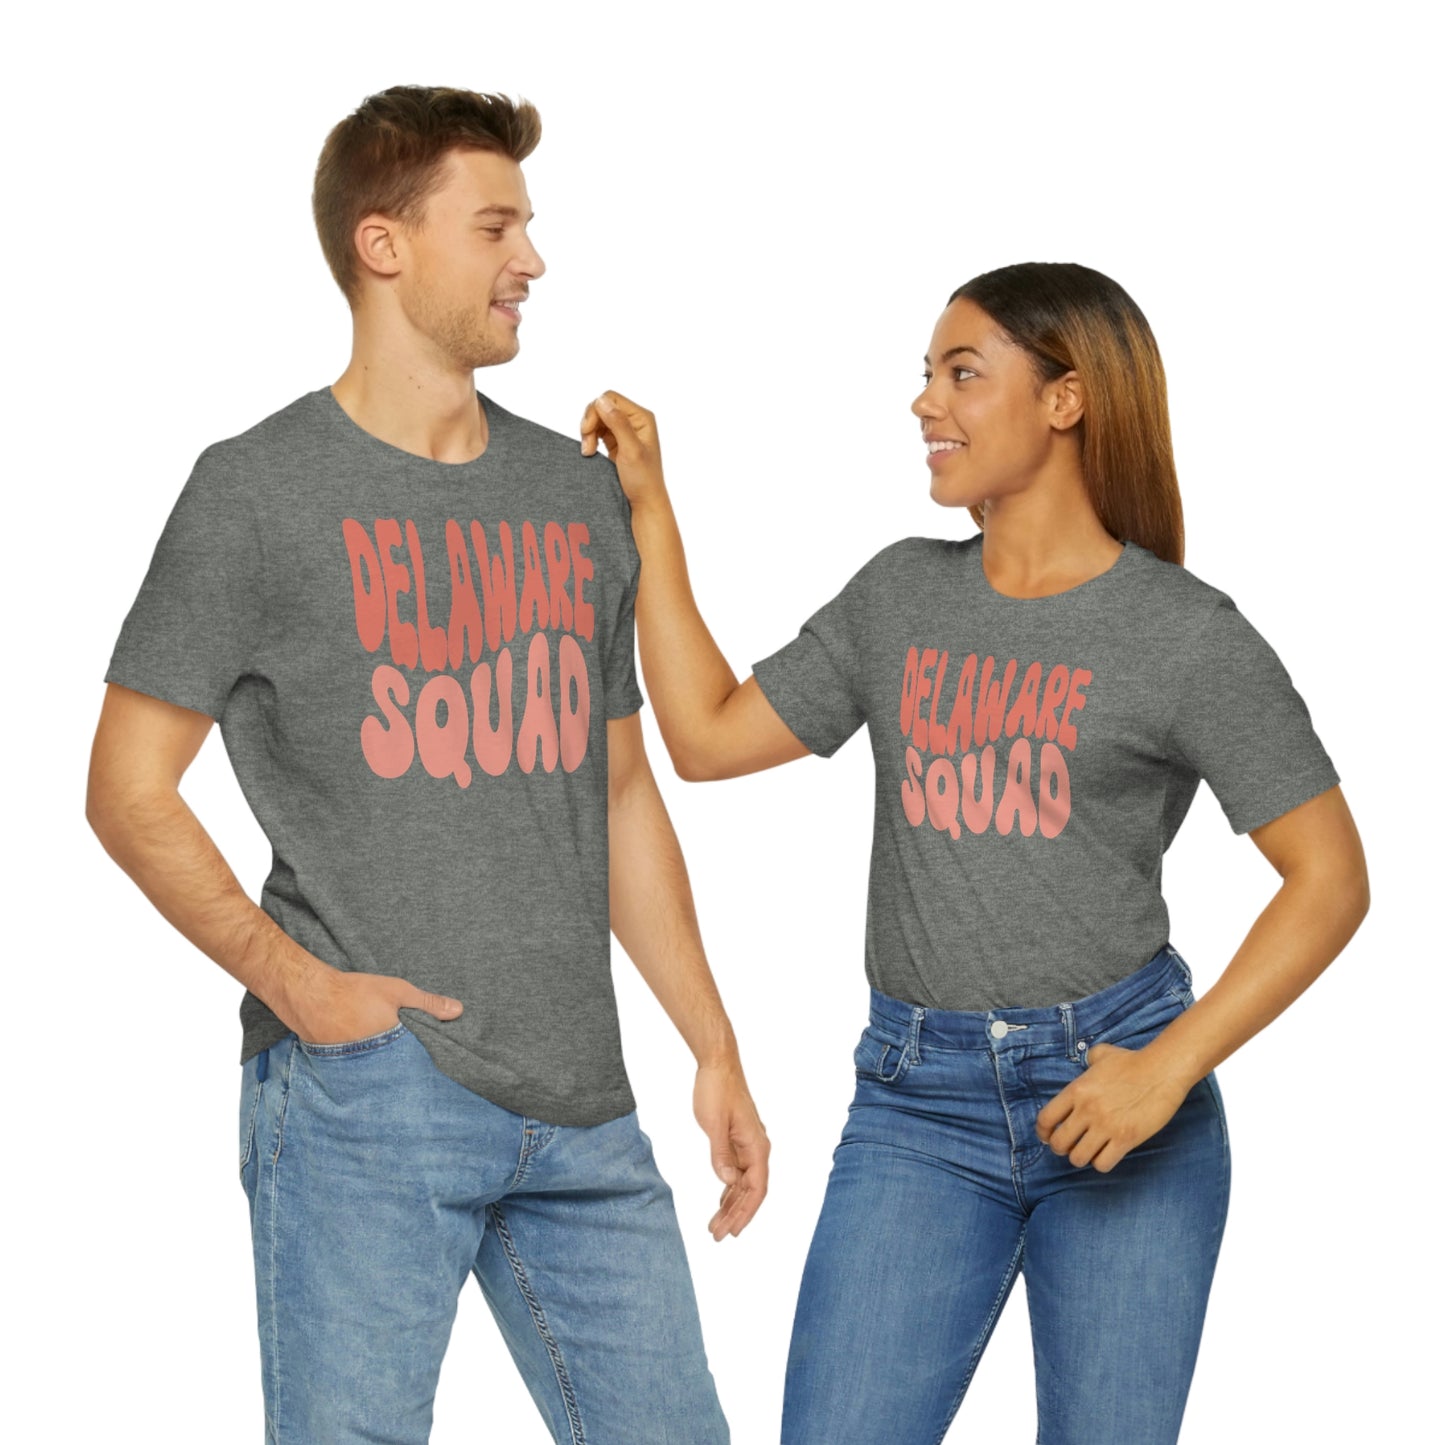 Delaware Squad Short Sleeve T-shirt